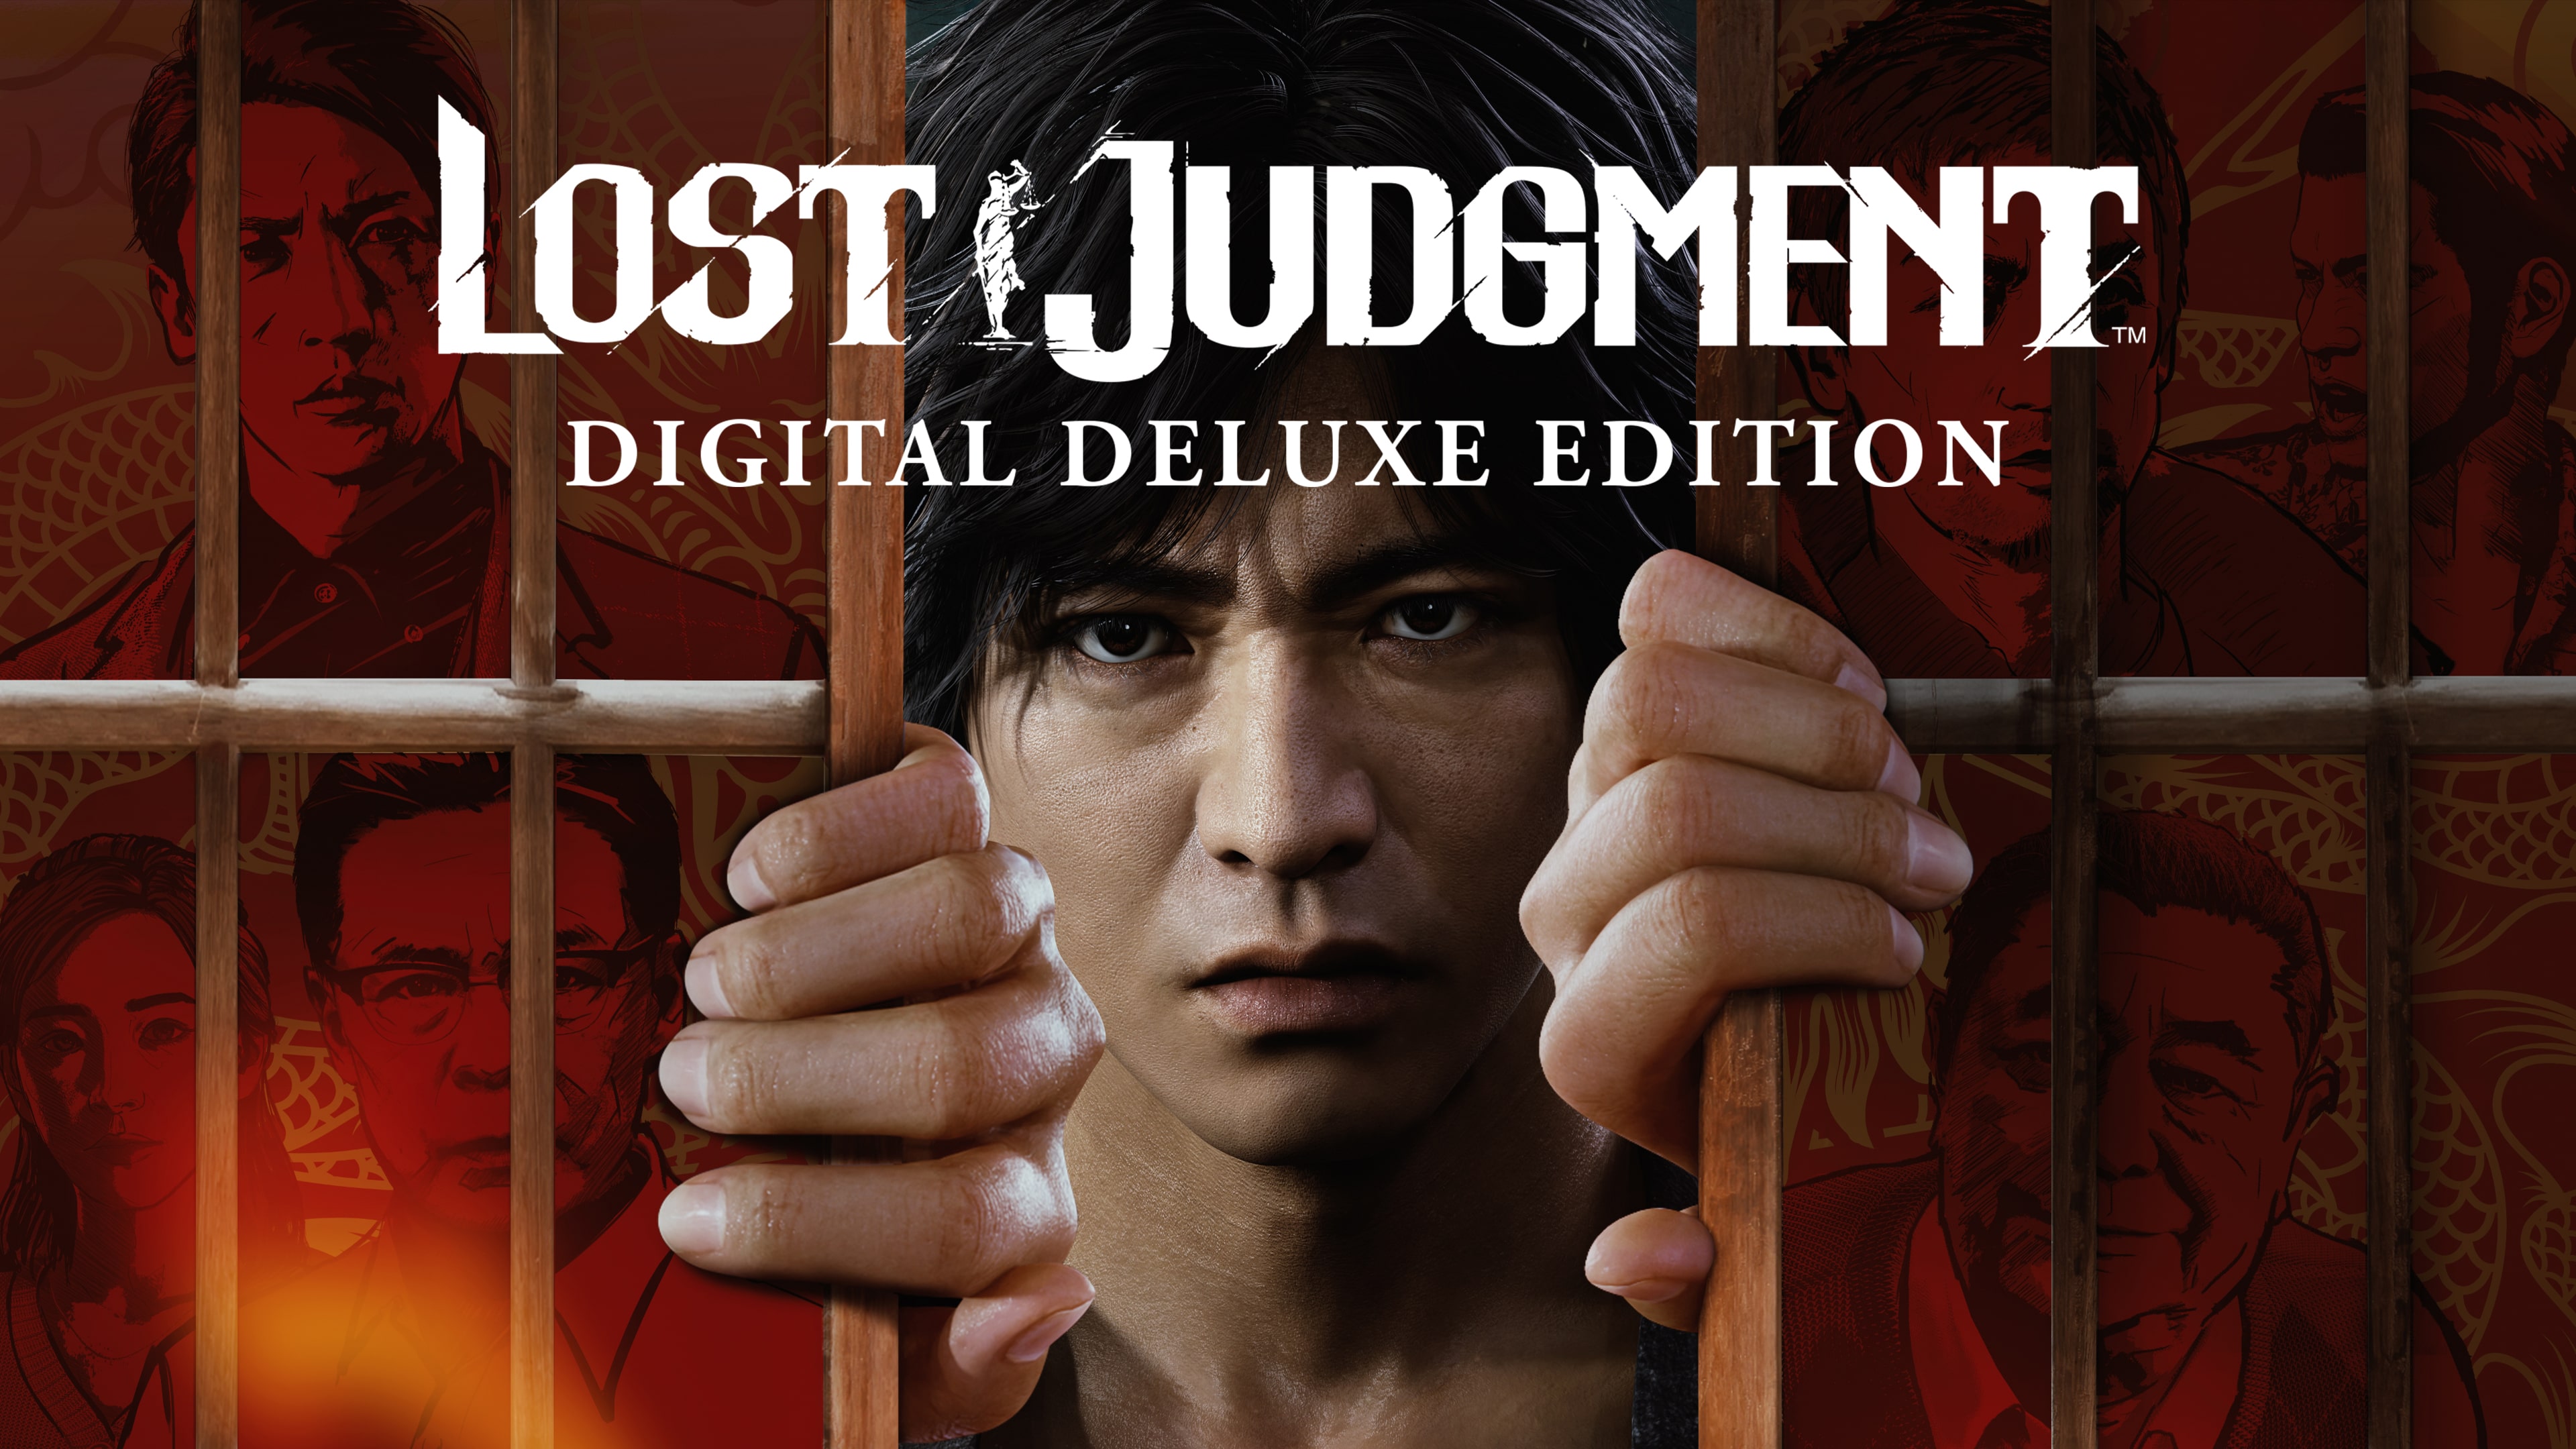 Lost Judgment Digital Deluxe Edition (PS4 & PS5 Digital) $18